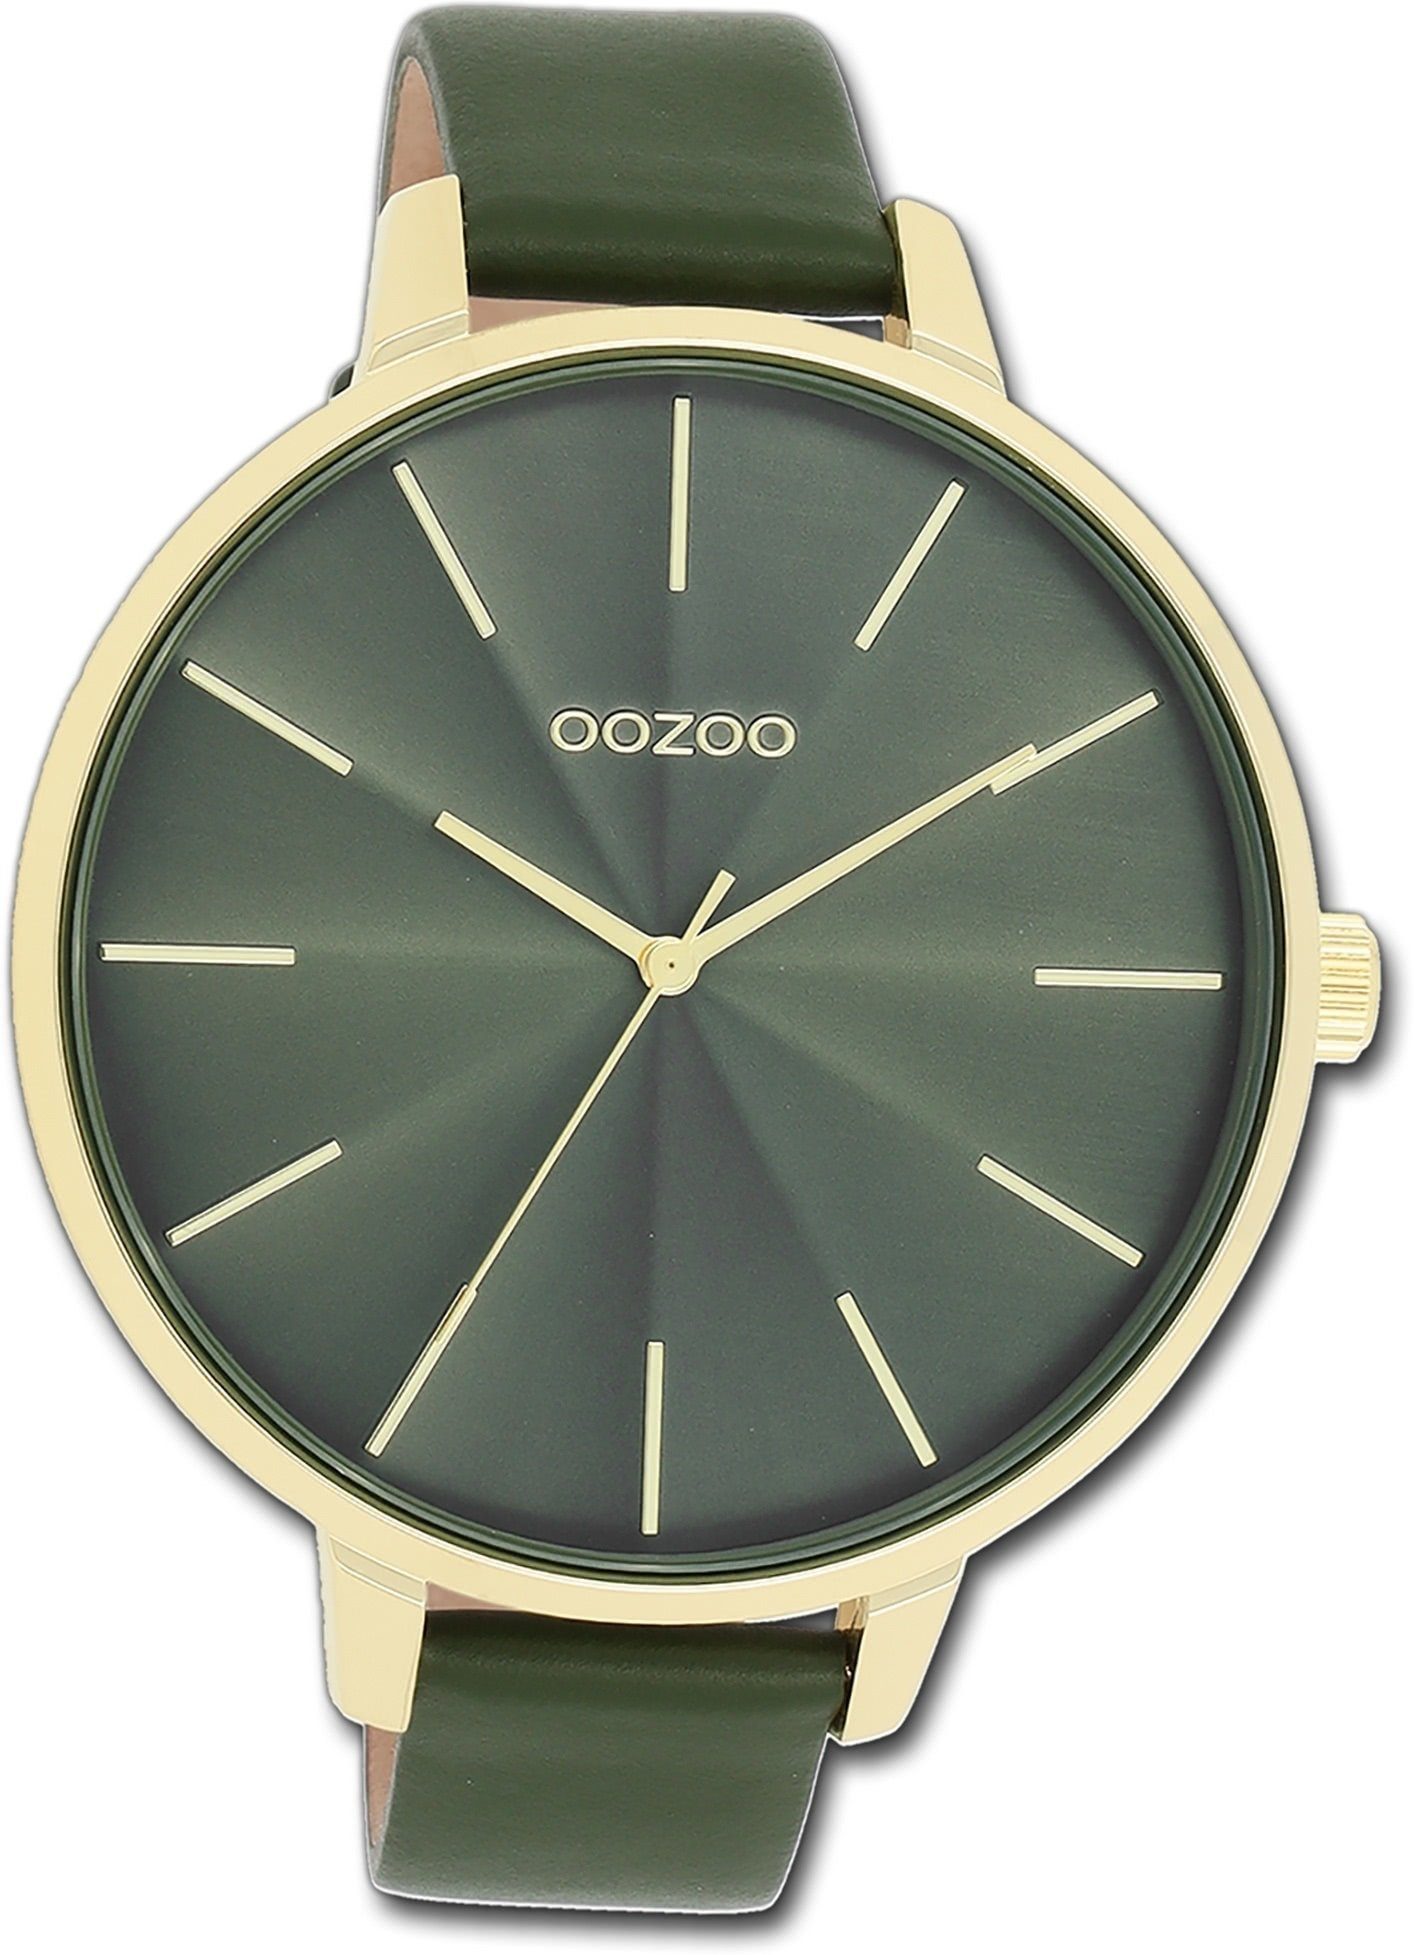 OOZOO Quarzuhr Oozoo Damen Armbanduhr Timepieces, Damenuhr Lederarmband forest grün, rundes Gehäuse, extra groß (48mm)